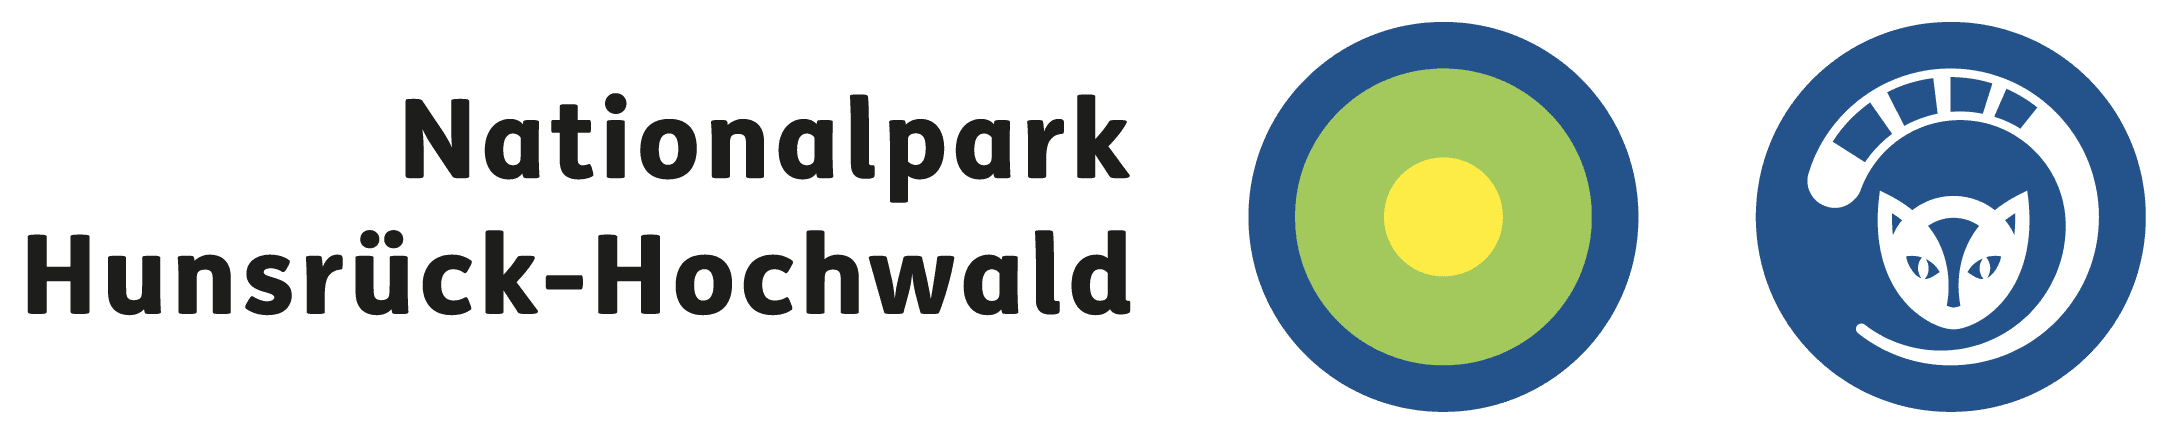 nationalpark-Logo.png